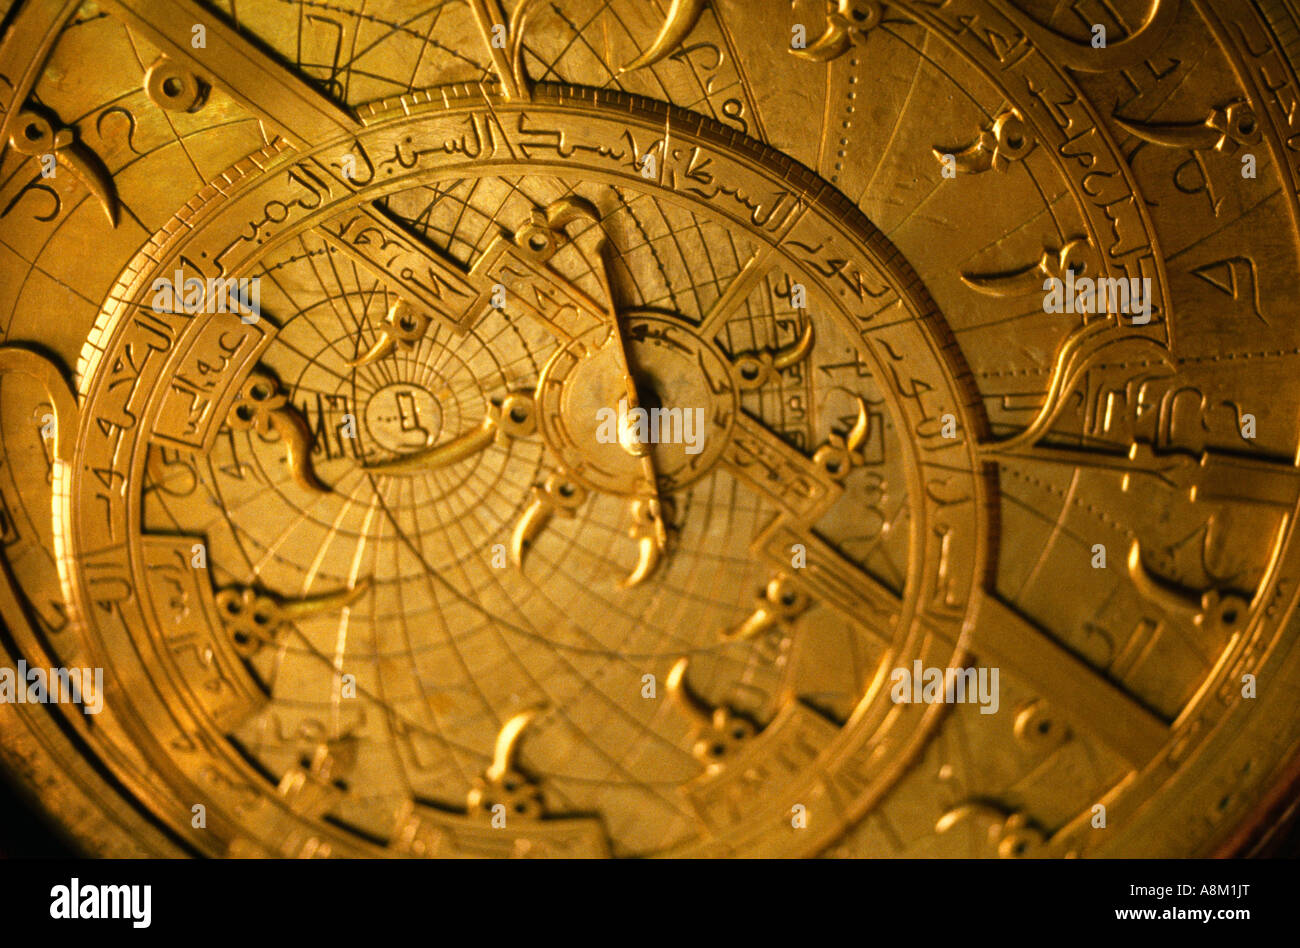 Astrolabe Islamic Navigation Aid Detail Stock Photo